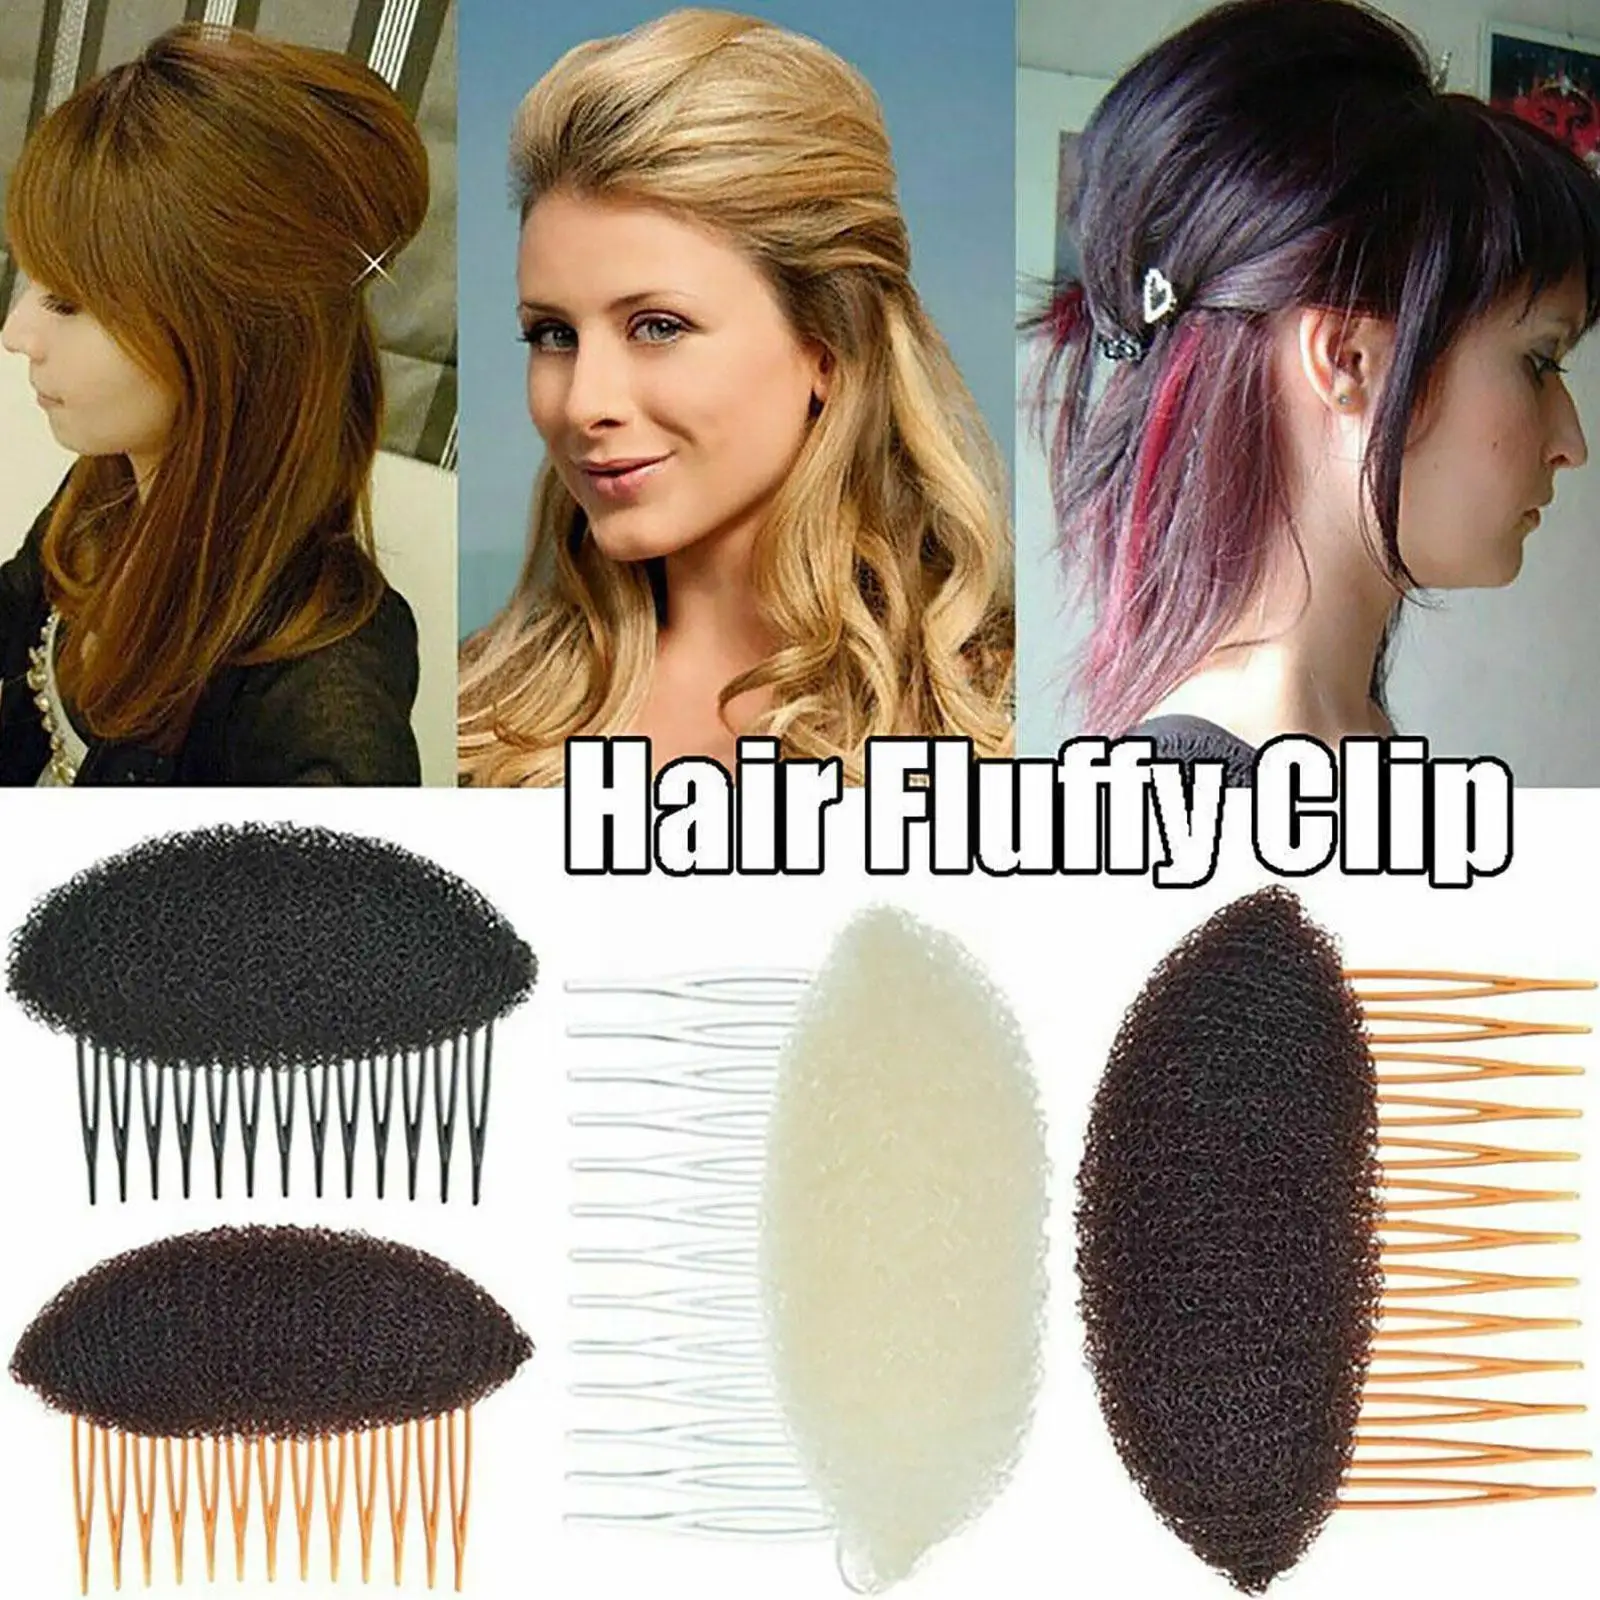 

2pcs Fashion Comb Women Hair Styling Clip Portable Bun Hairpin Sponge Plastic Maker Fluffy Tool Stick Accessories Braid Hai O4b2